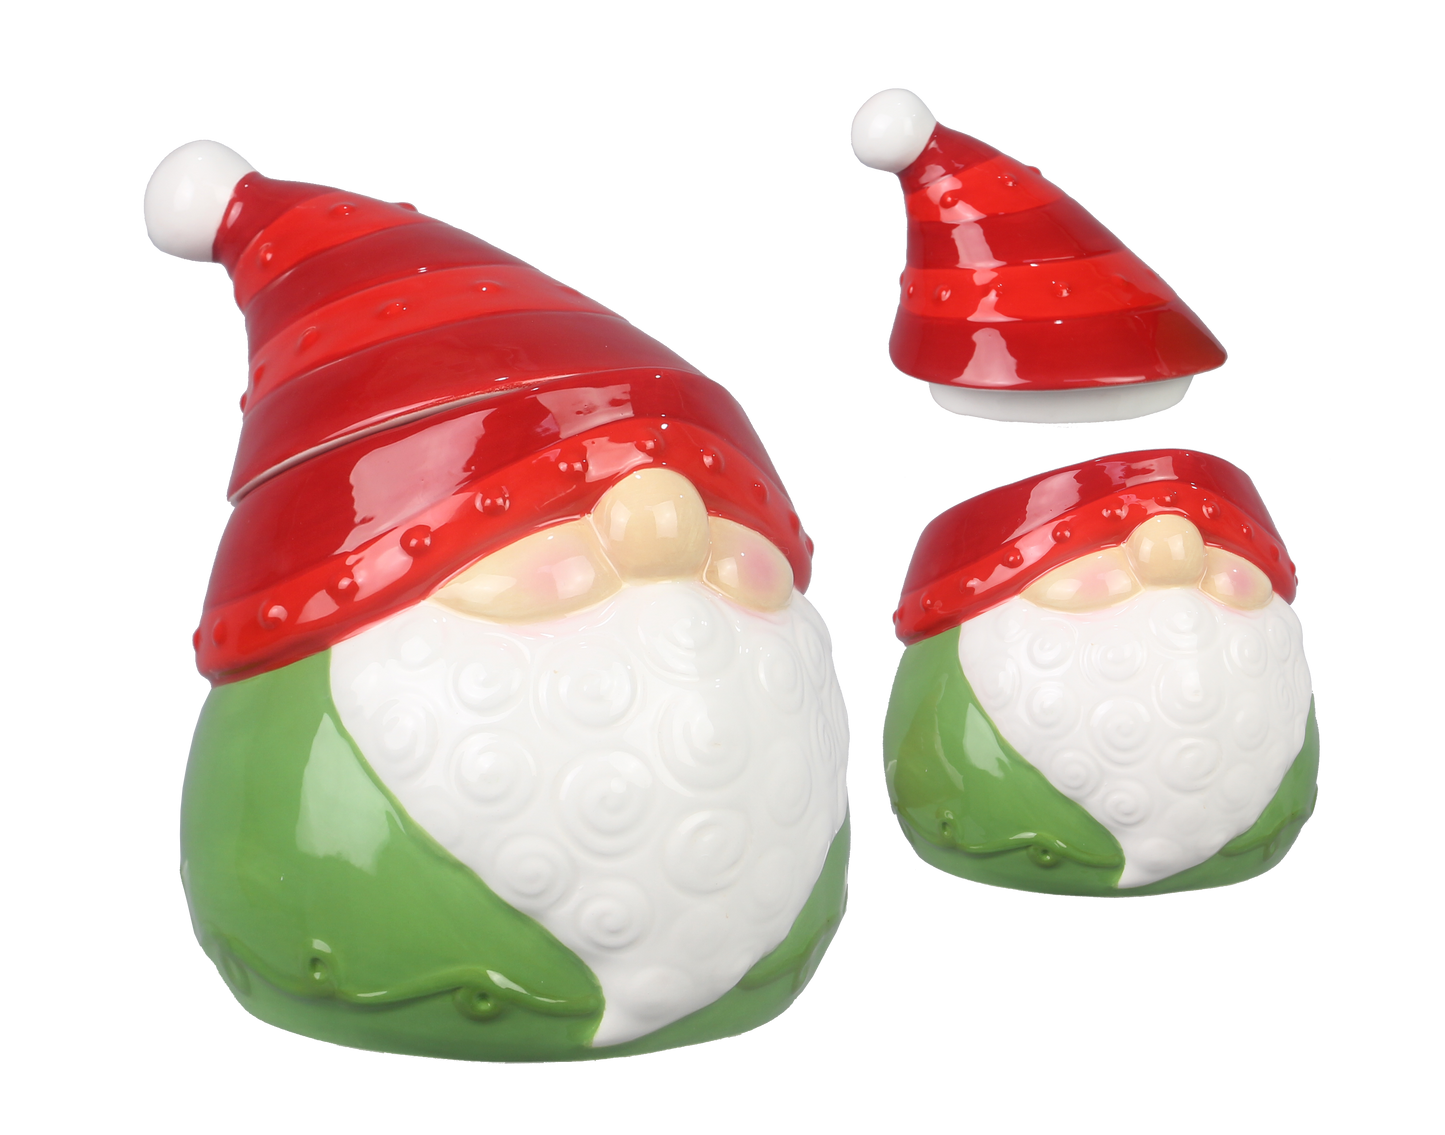 Ceramic Christmas Whimsical Gnome Treat Jar